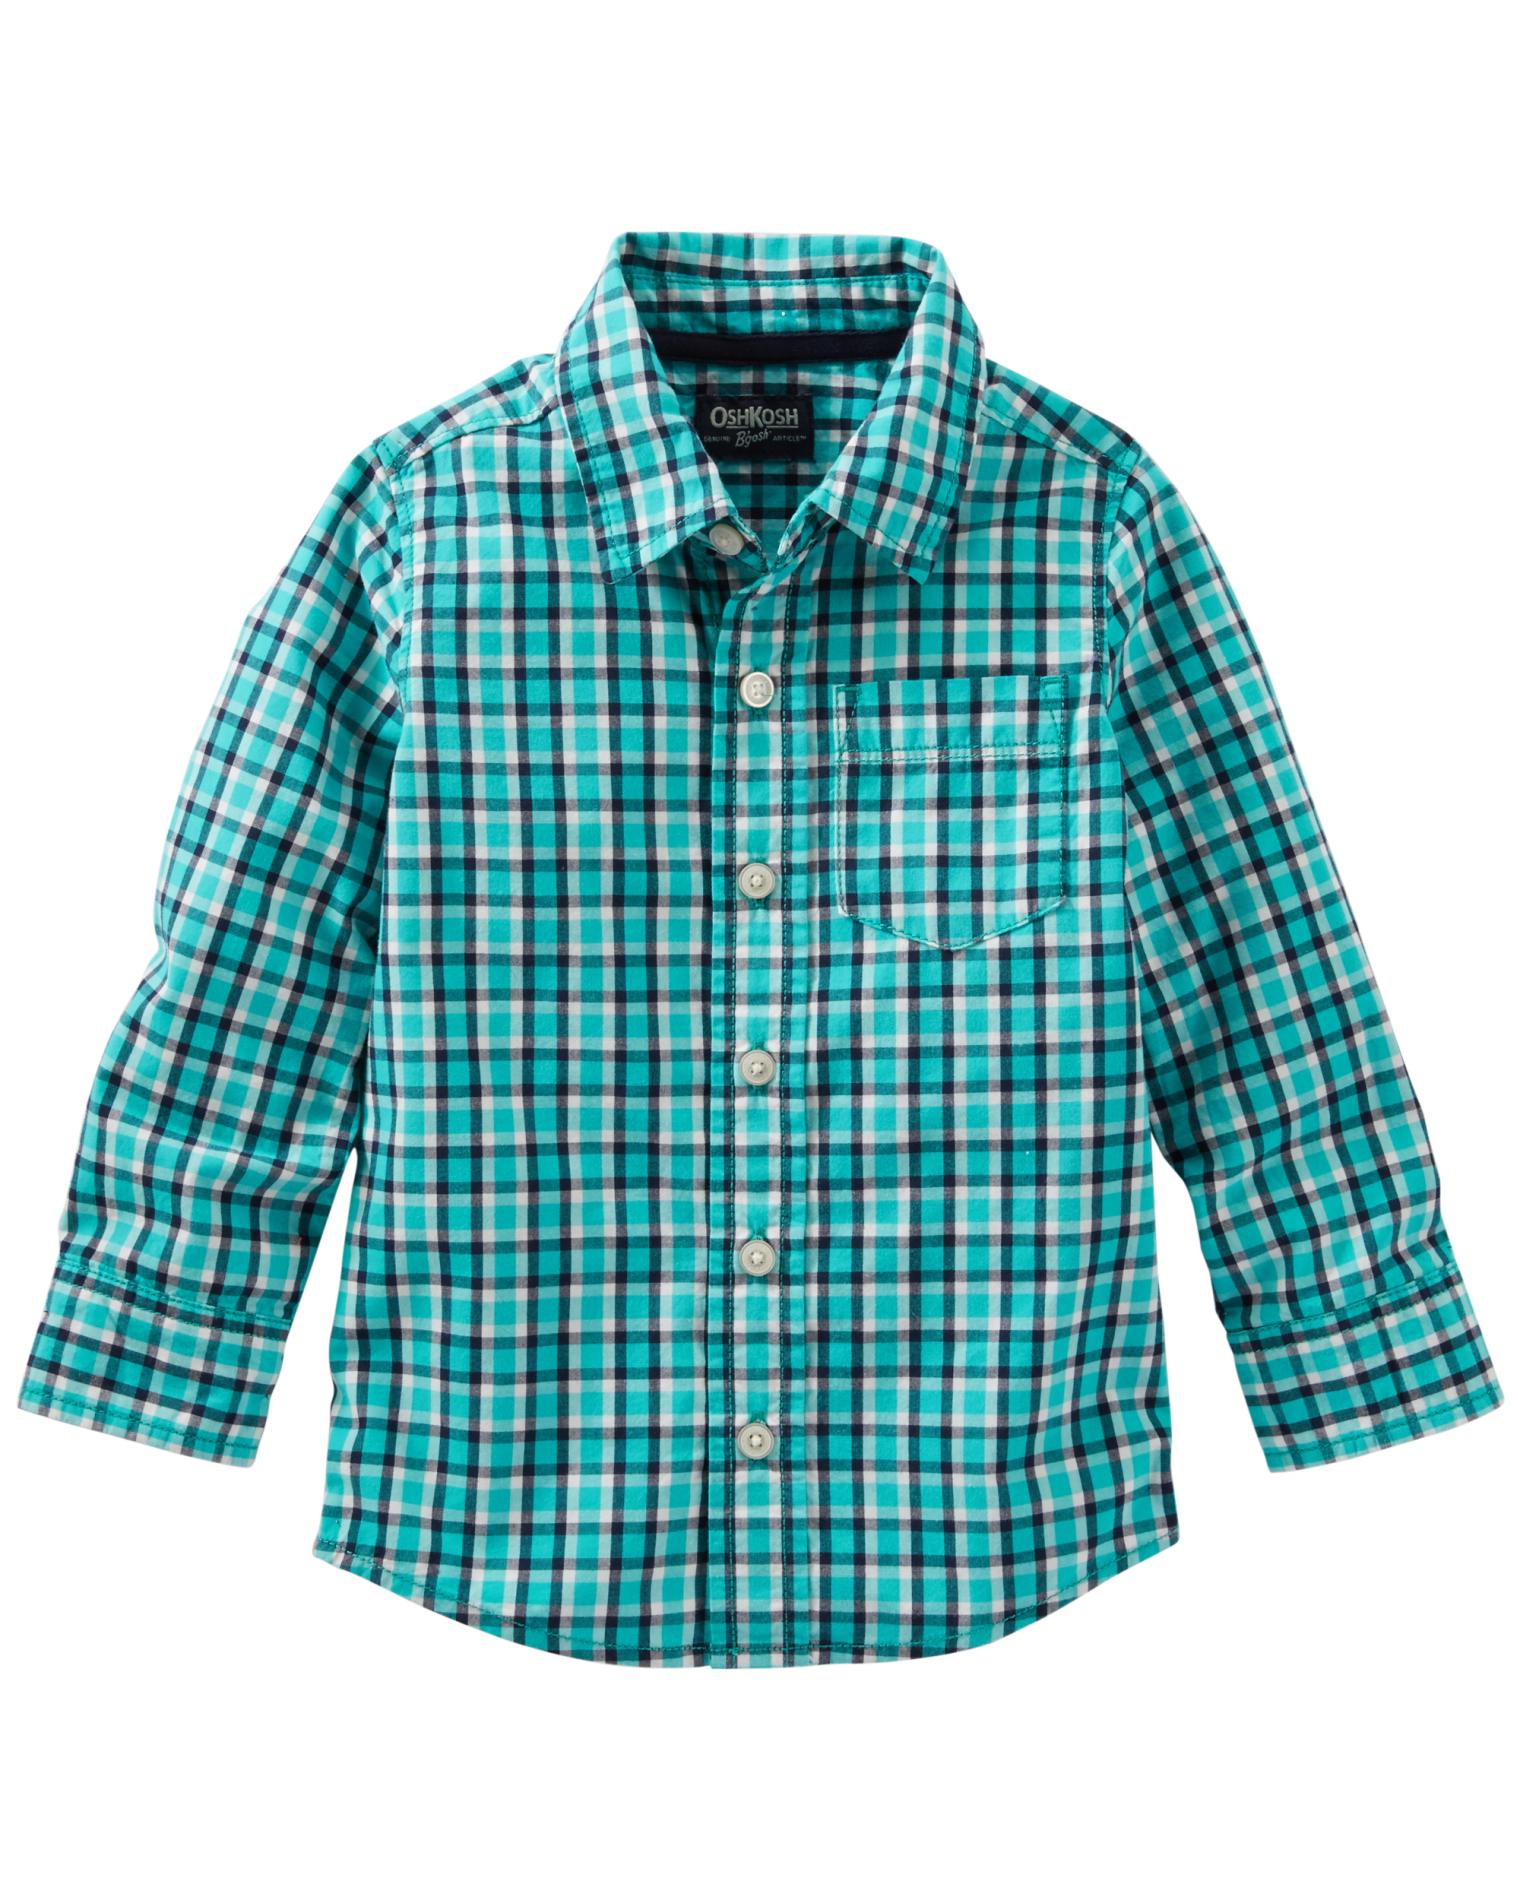 OshKosh Toddler Boys' Button-Front Shirt - Plaid